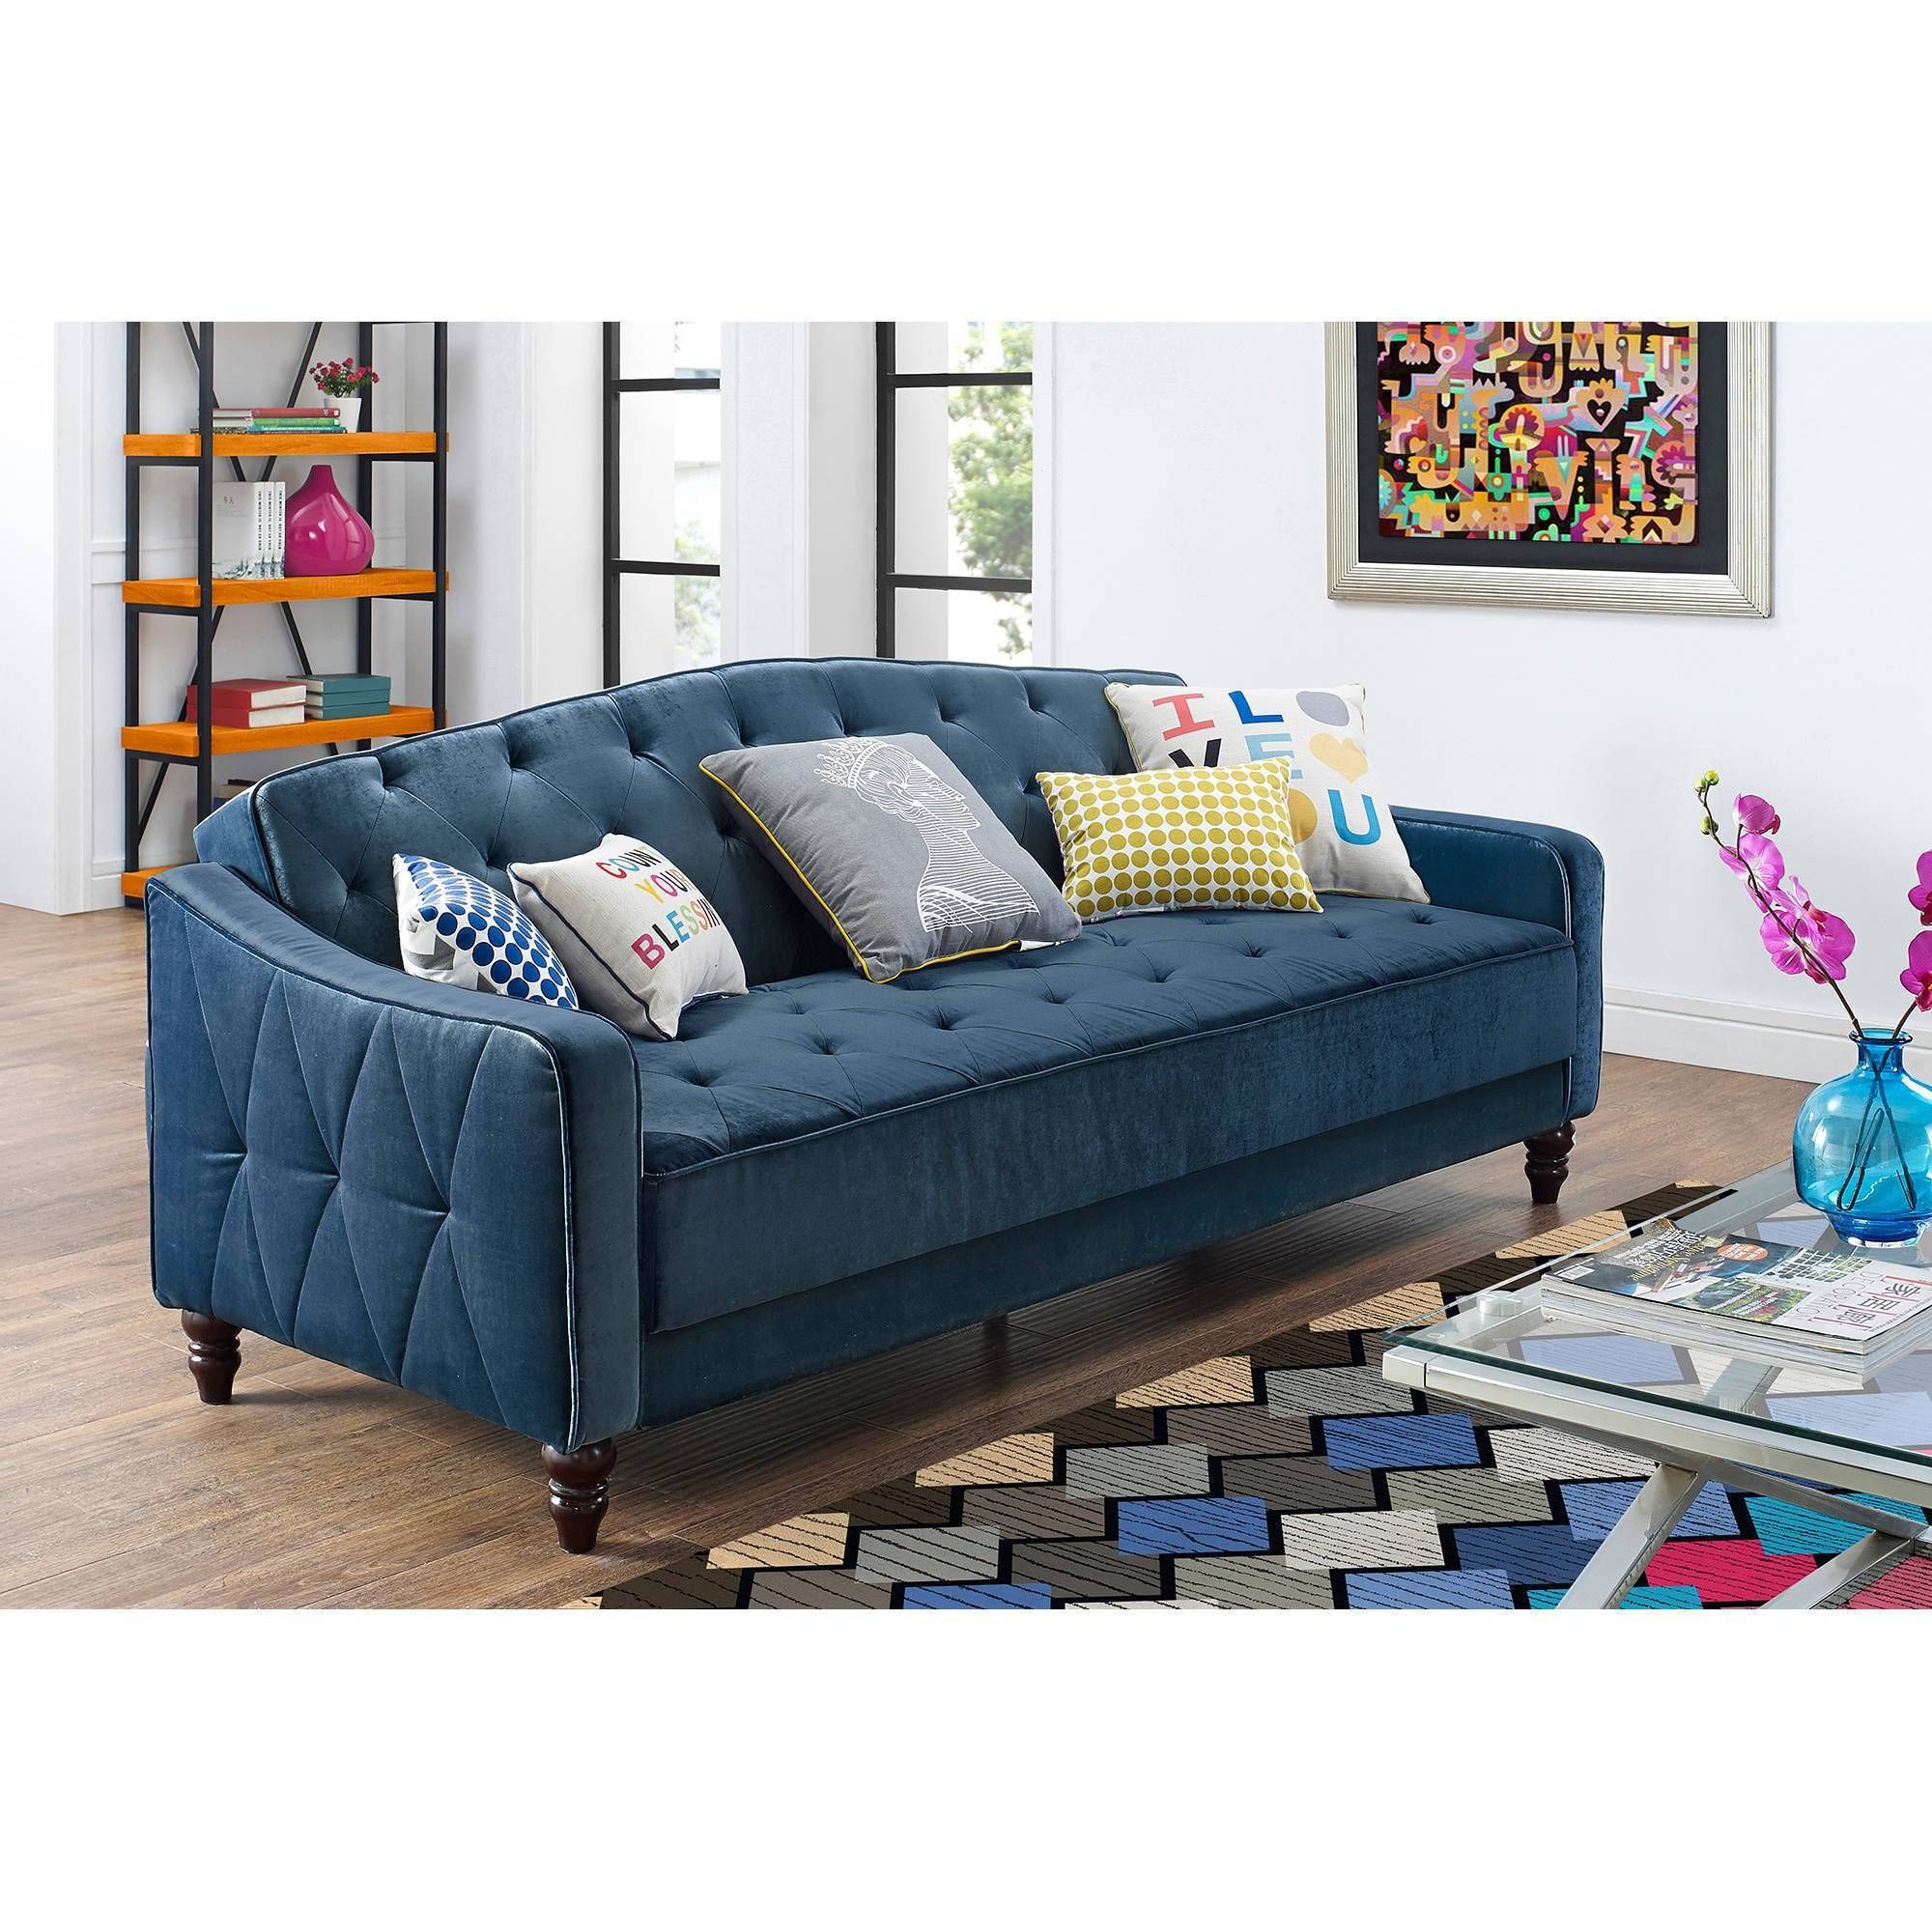 Elita Twin Size Sofa Sleeper With Hidden Storage, Beige – Walmart For Wallmart Sofa (View 6 of 25)